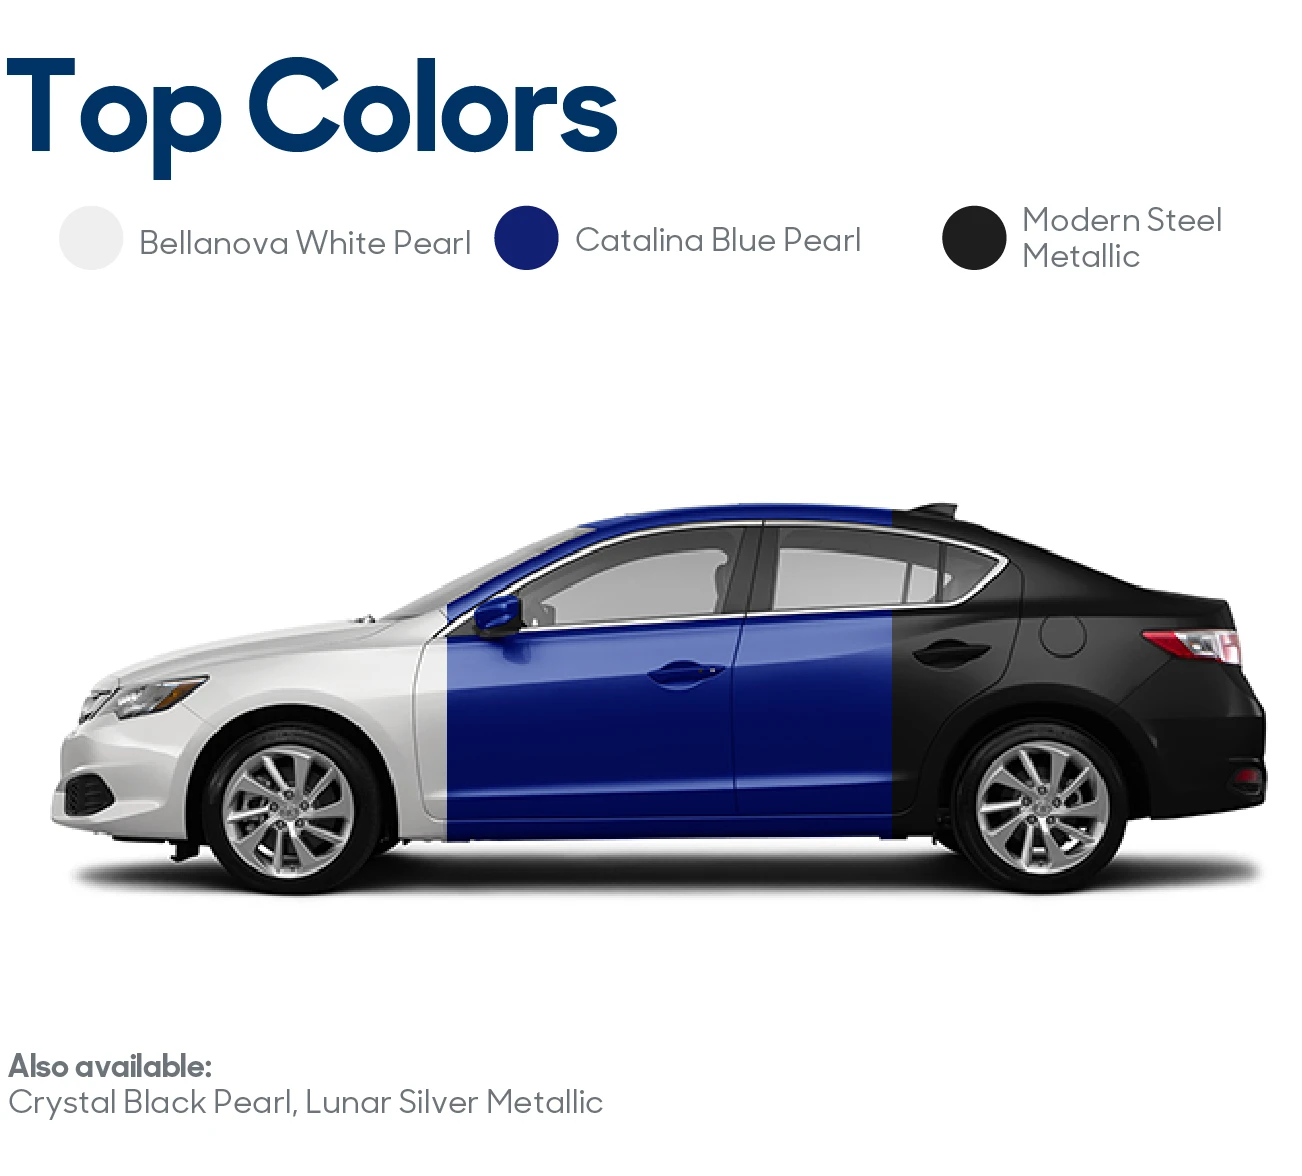 2017 Subaru ILX Review: Available Colors | CarMax